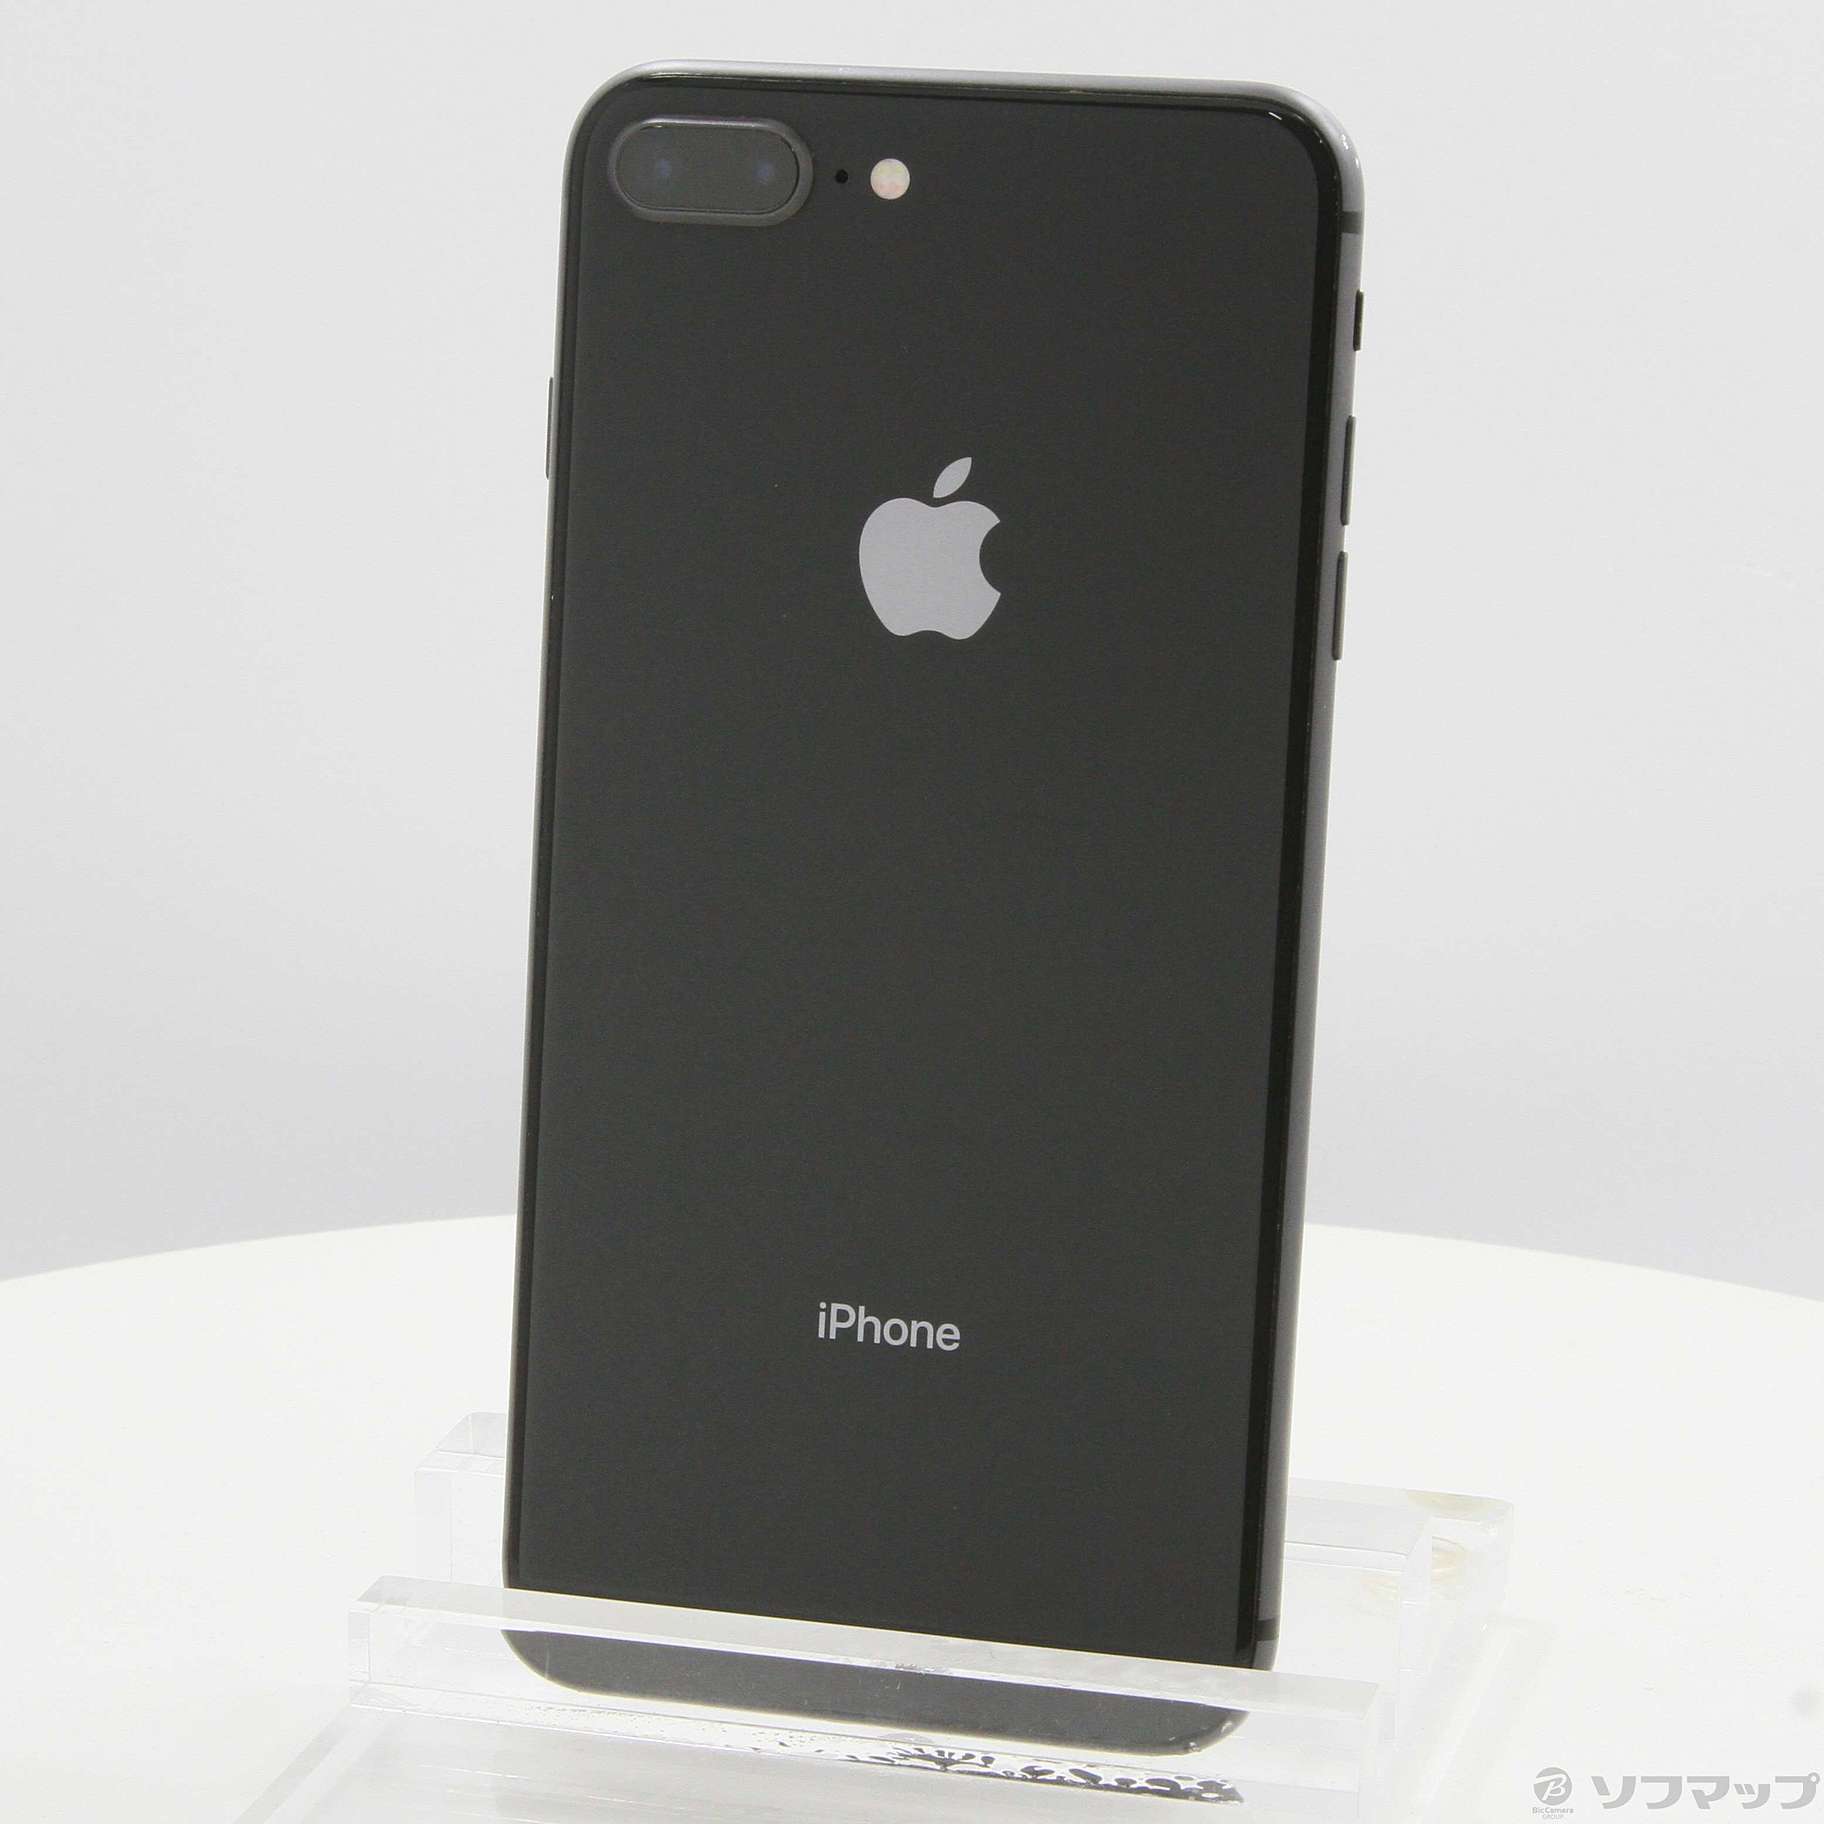 iPhone 8 Plus Space Gray 64 GB SIMフリー